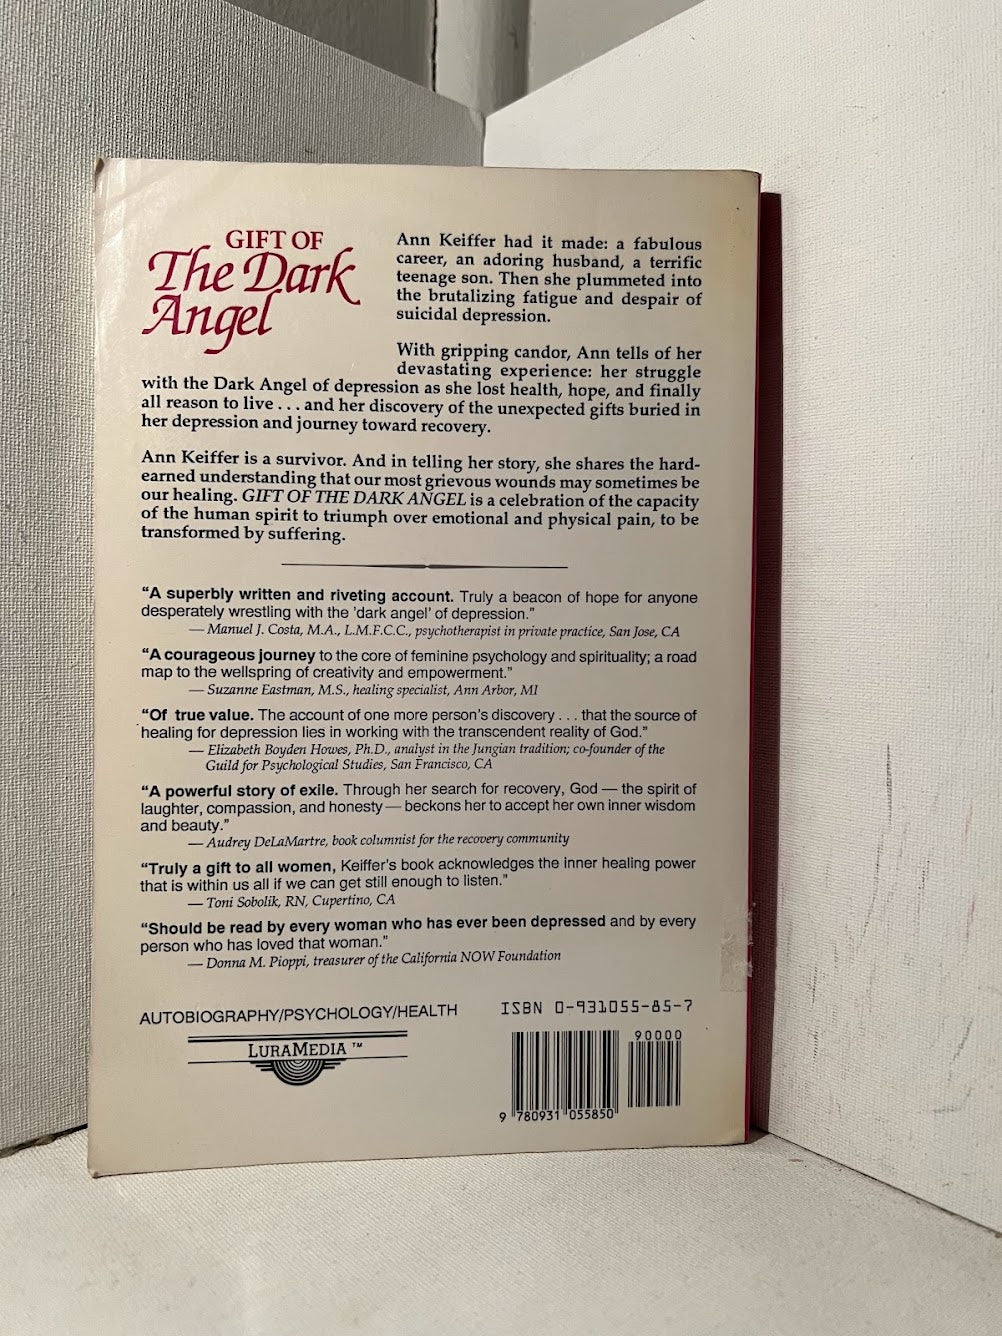 Gift of the Dark Angel by Ann Keiffer